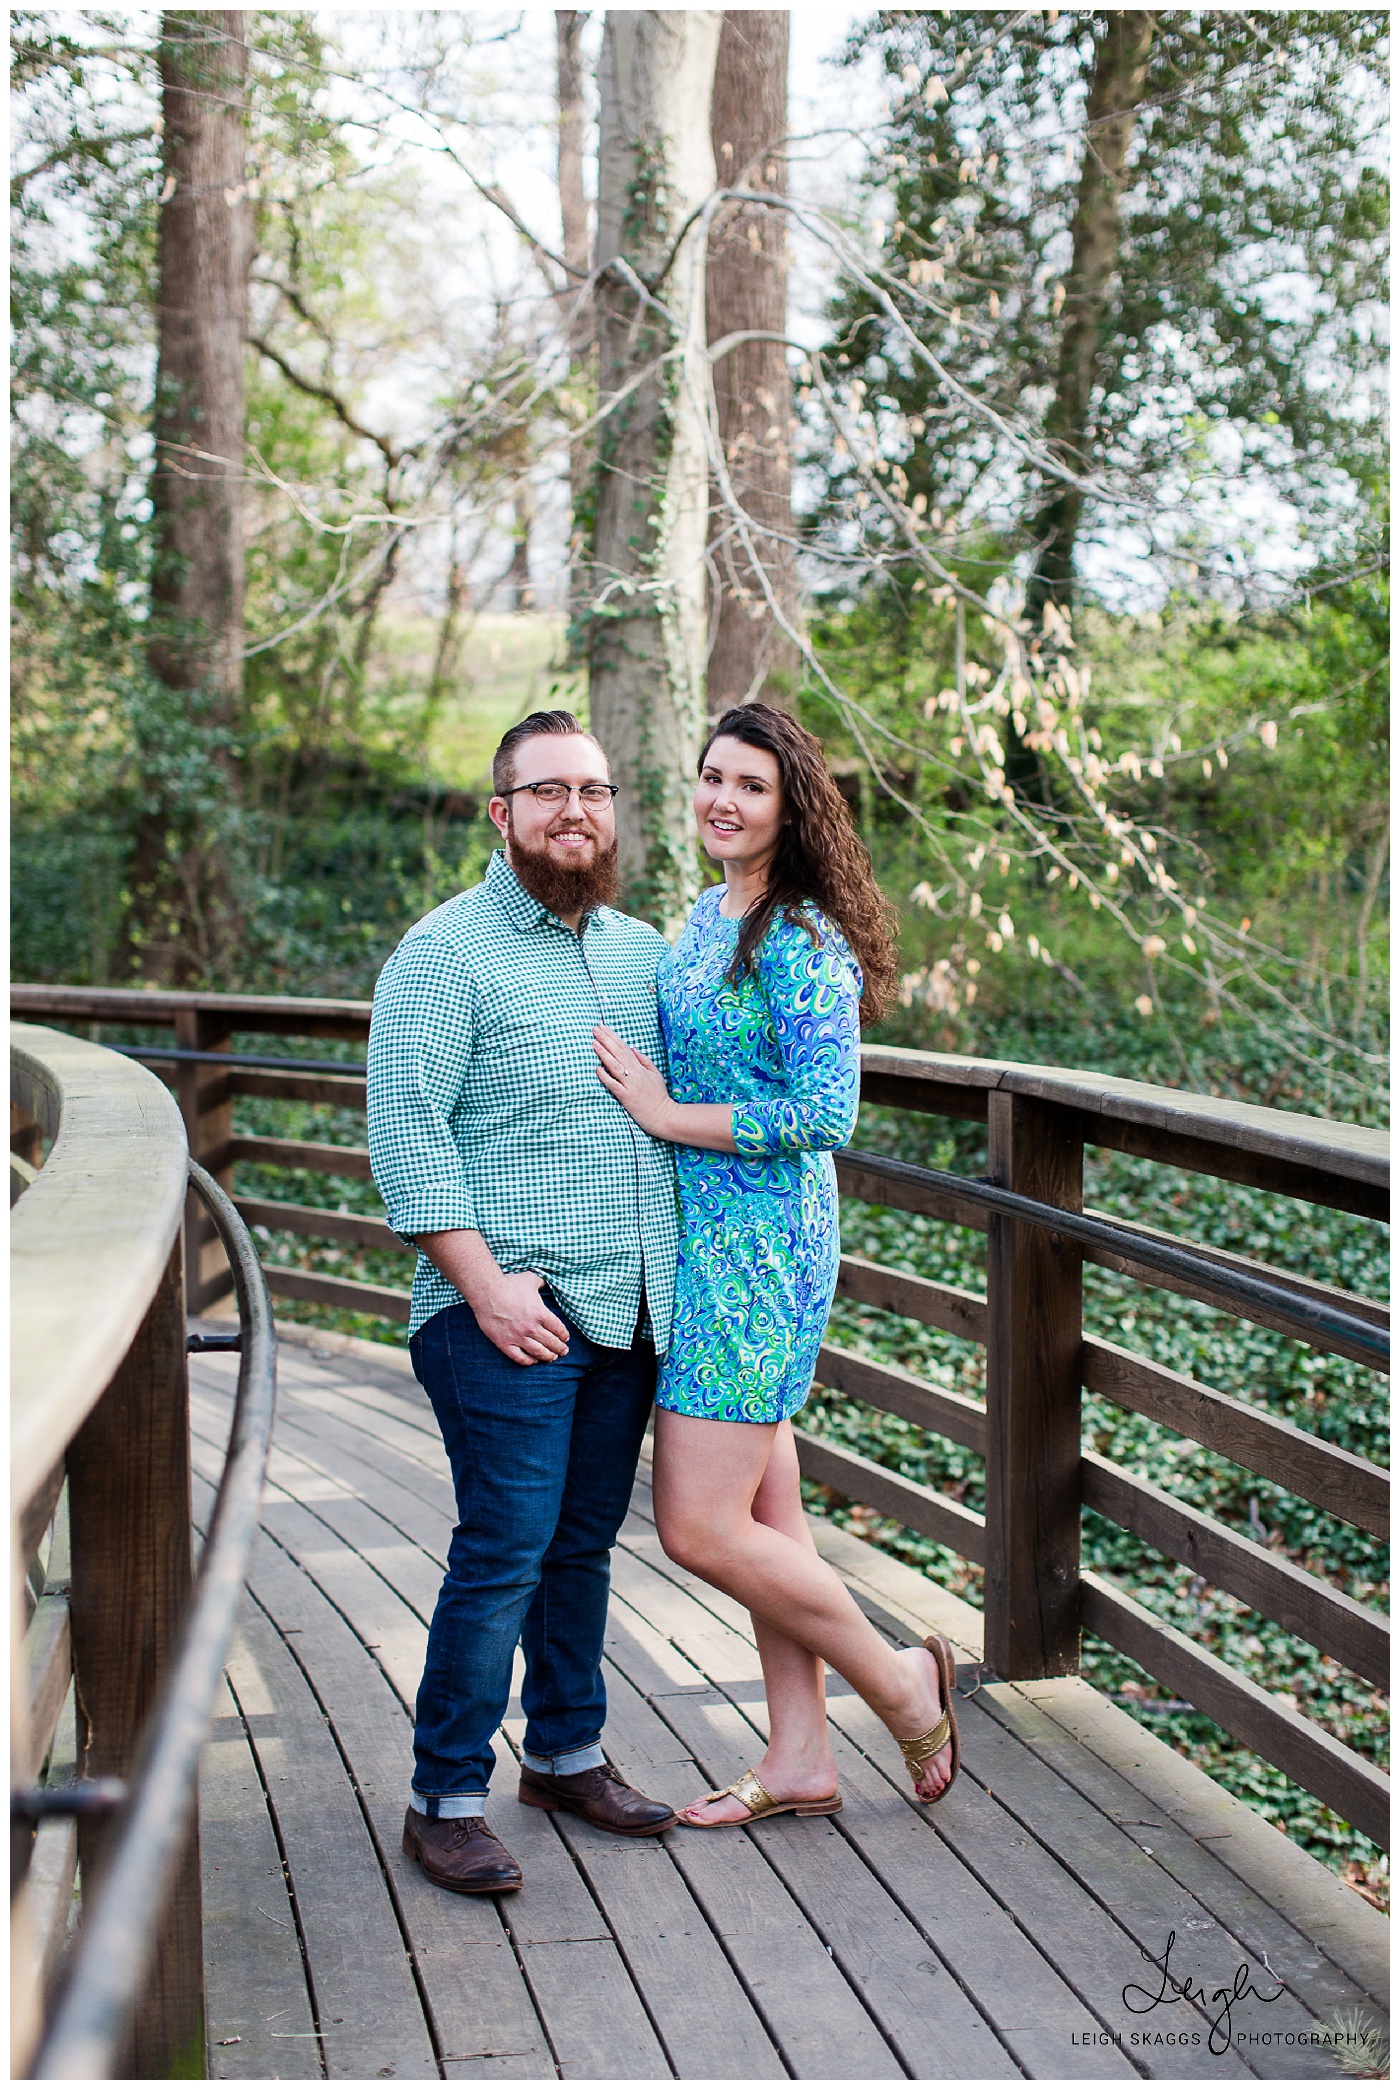 Erin & Lloyd | Forrest Hill Park Engagement session